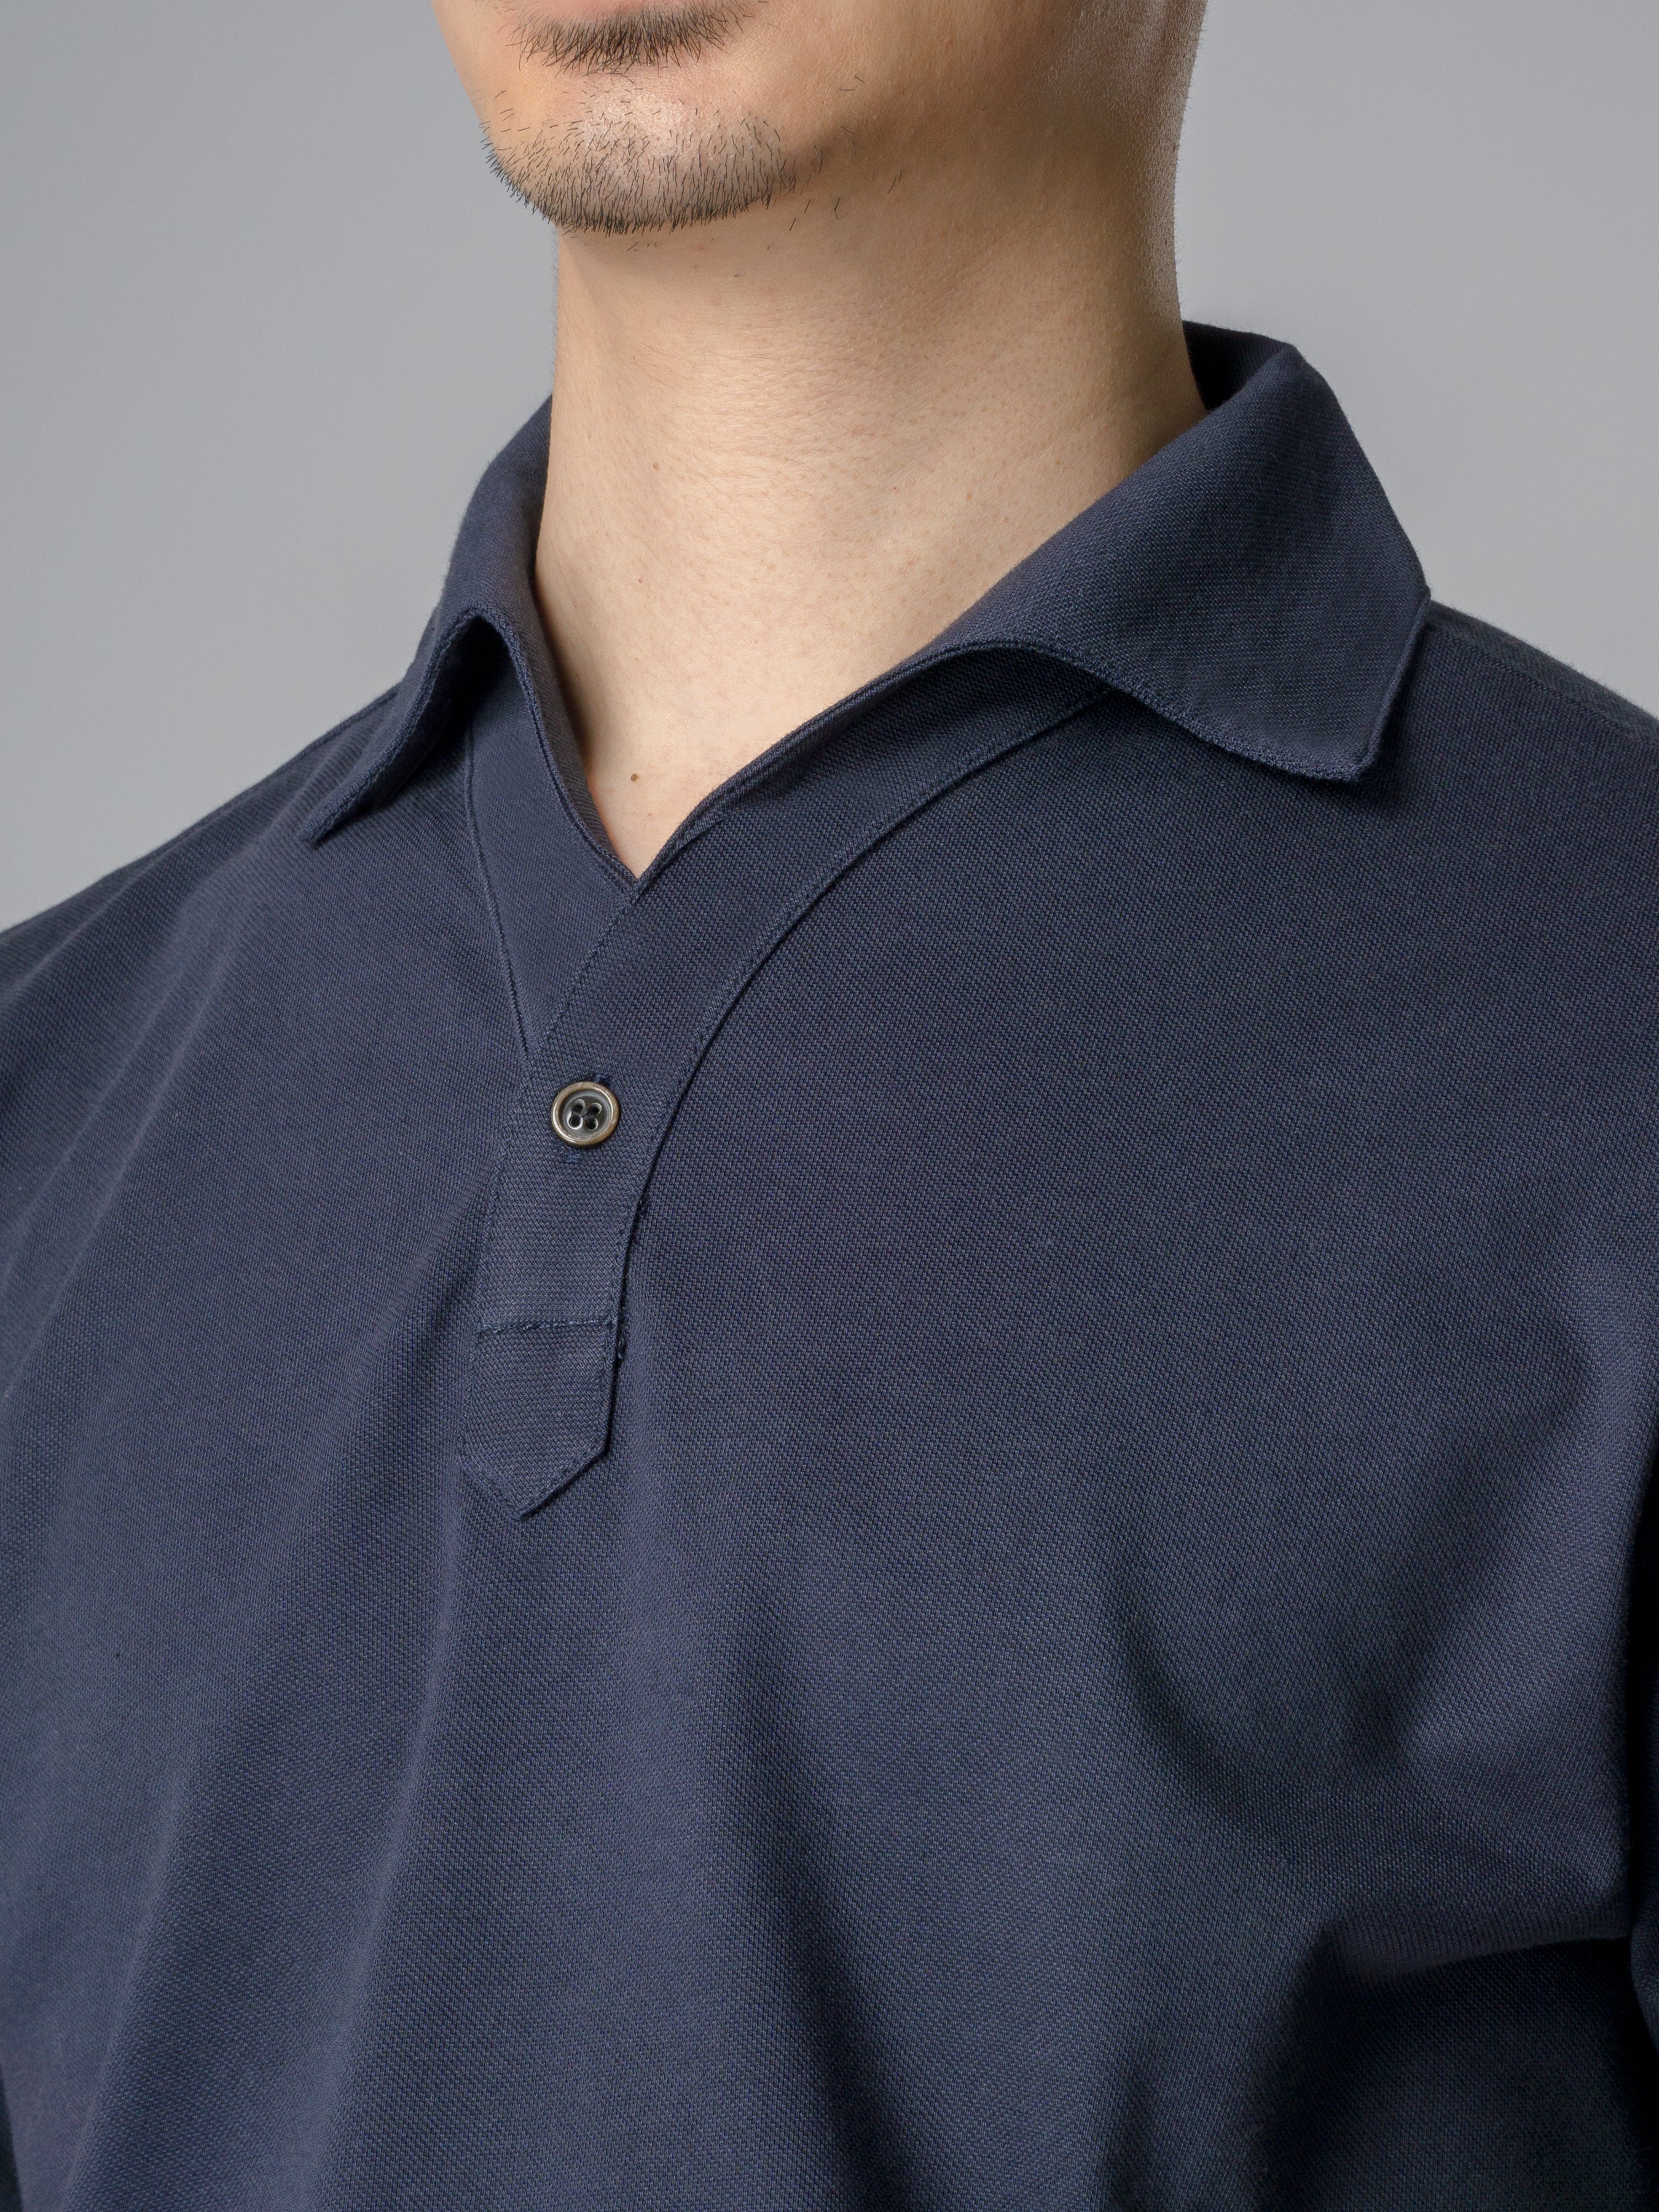 Ezio Polo Shirt - Navy Blue One-Piece Collar | Zeve Shoes